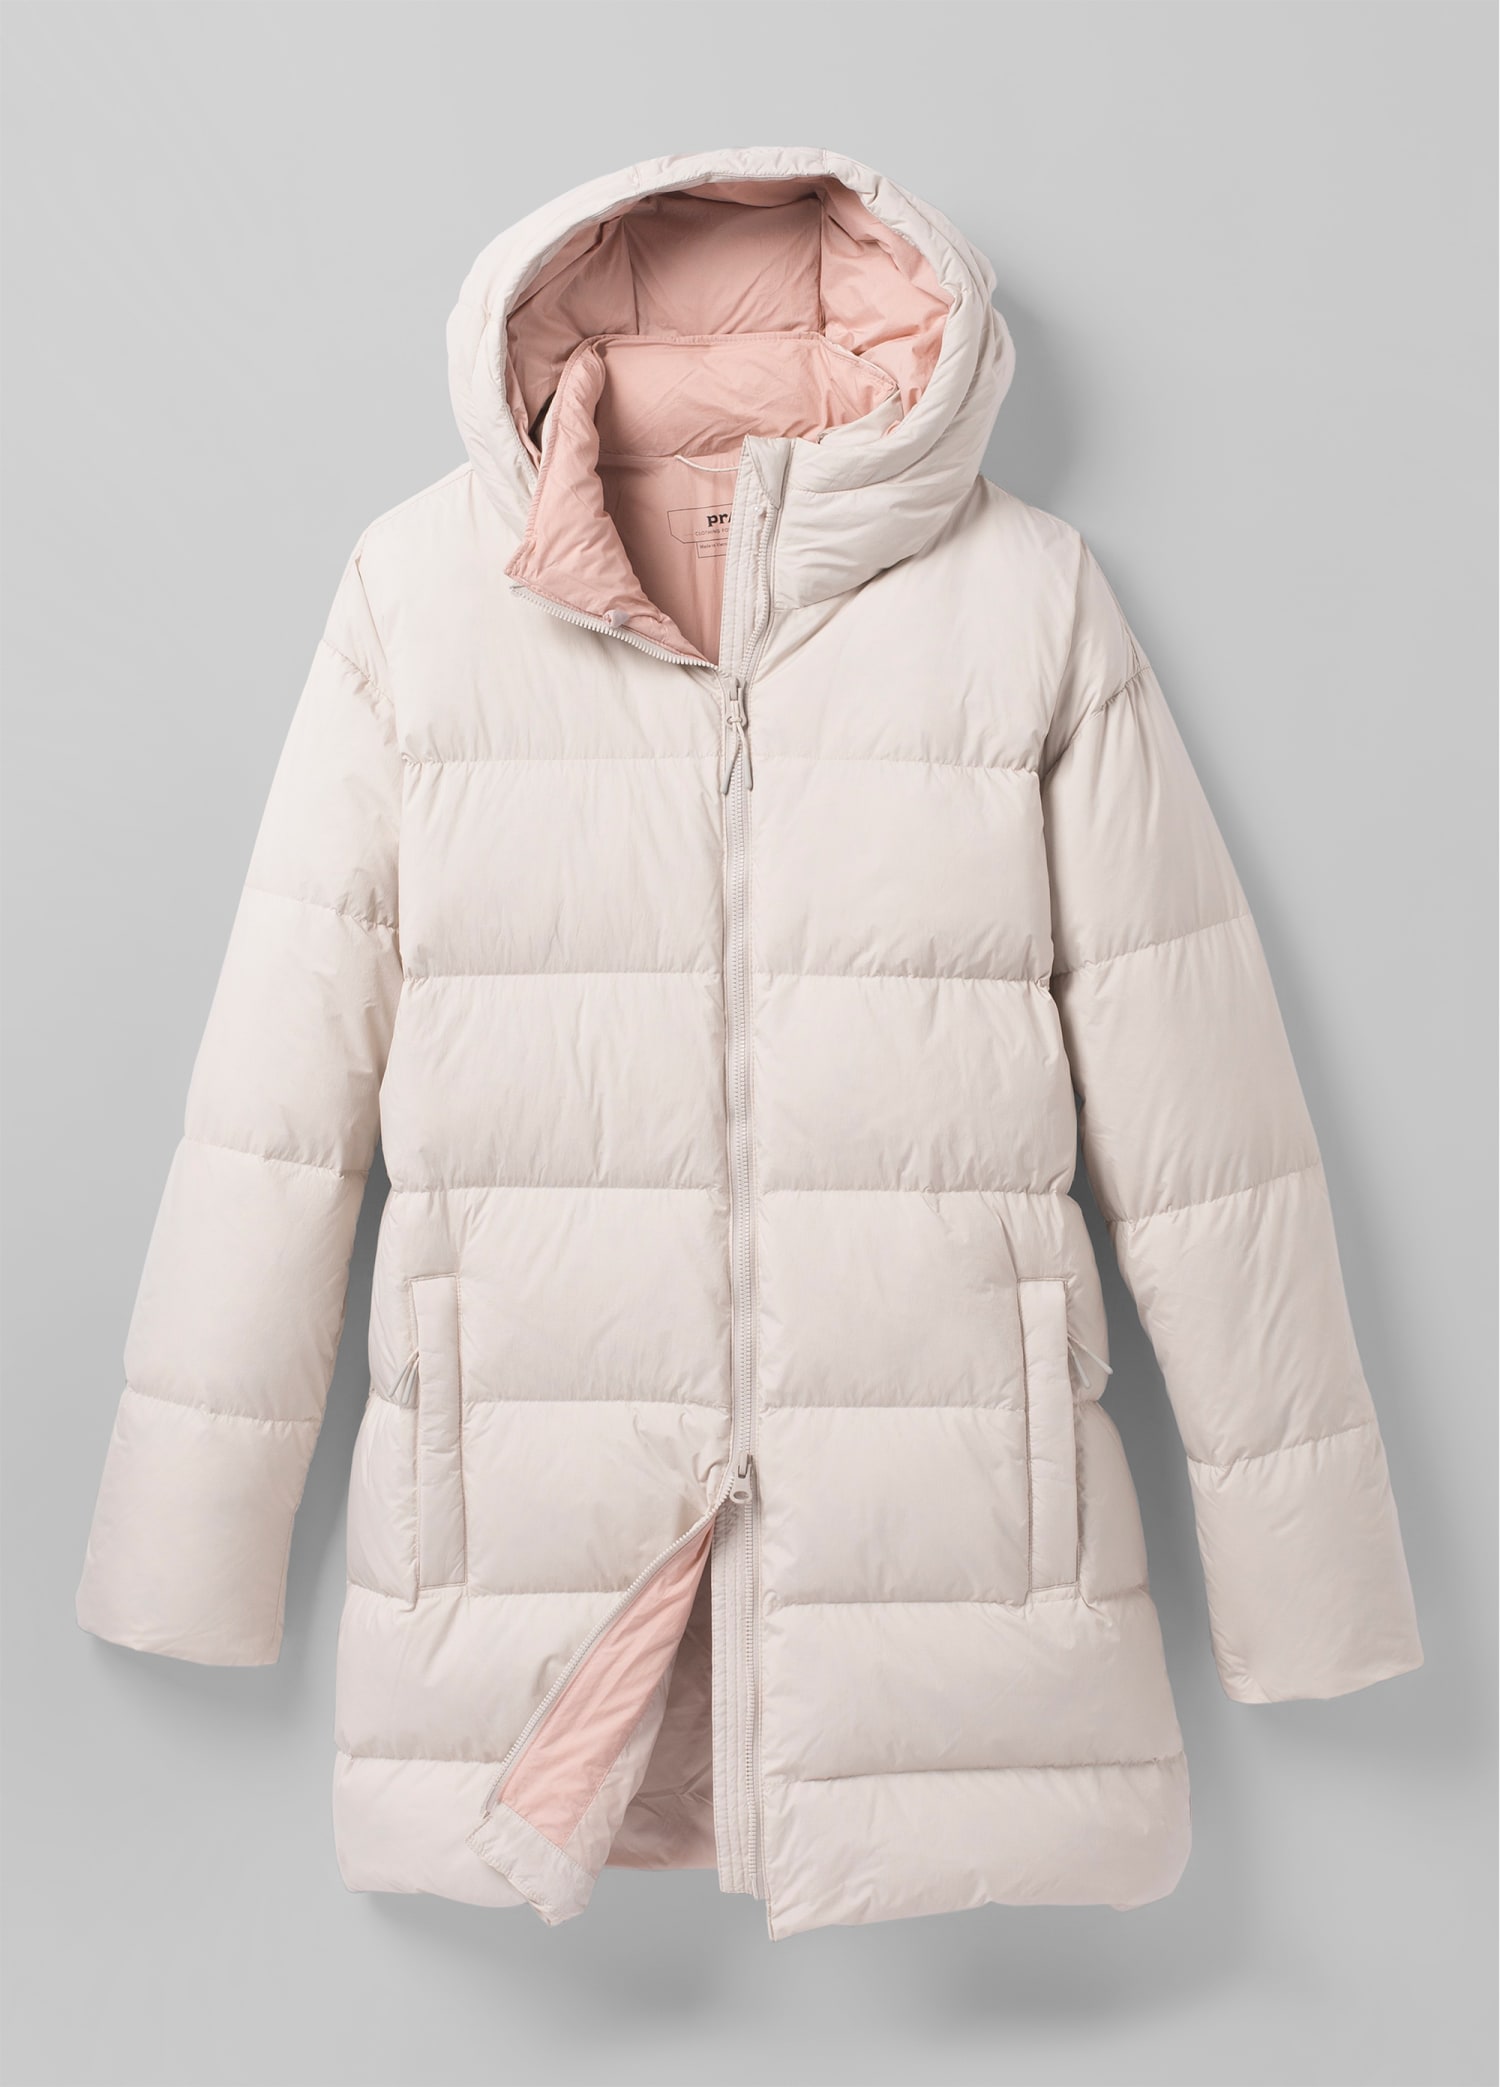 Winter Coats 2020 Best Jackets, Winter Coats